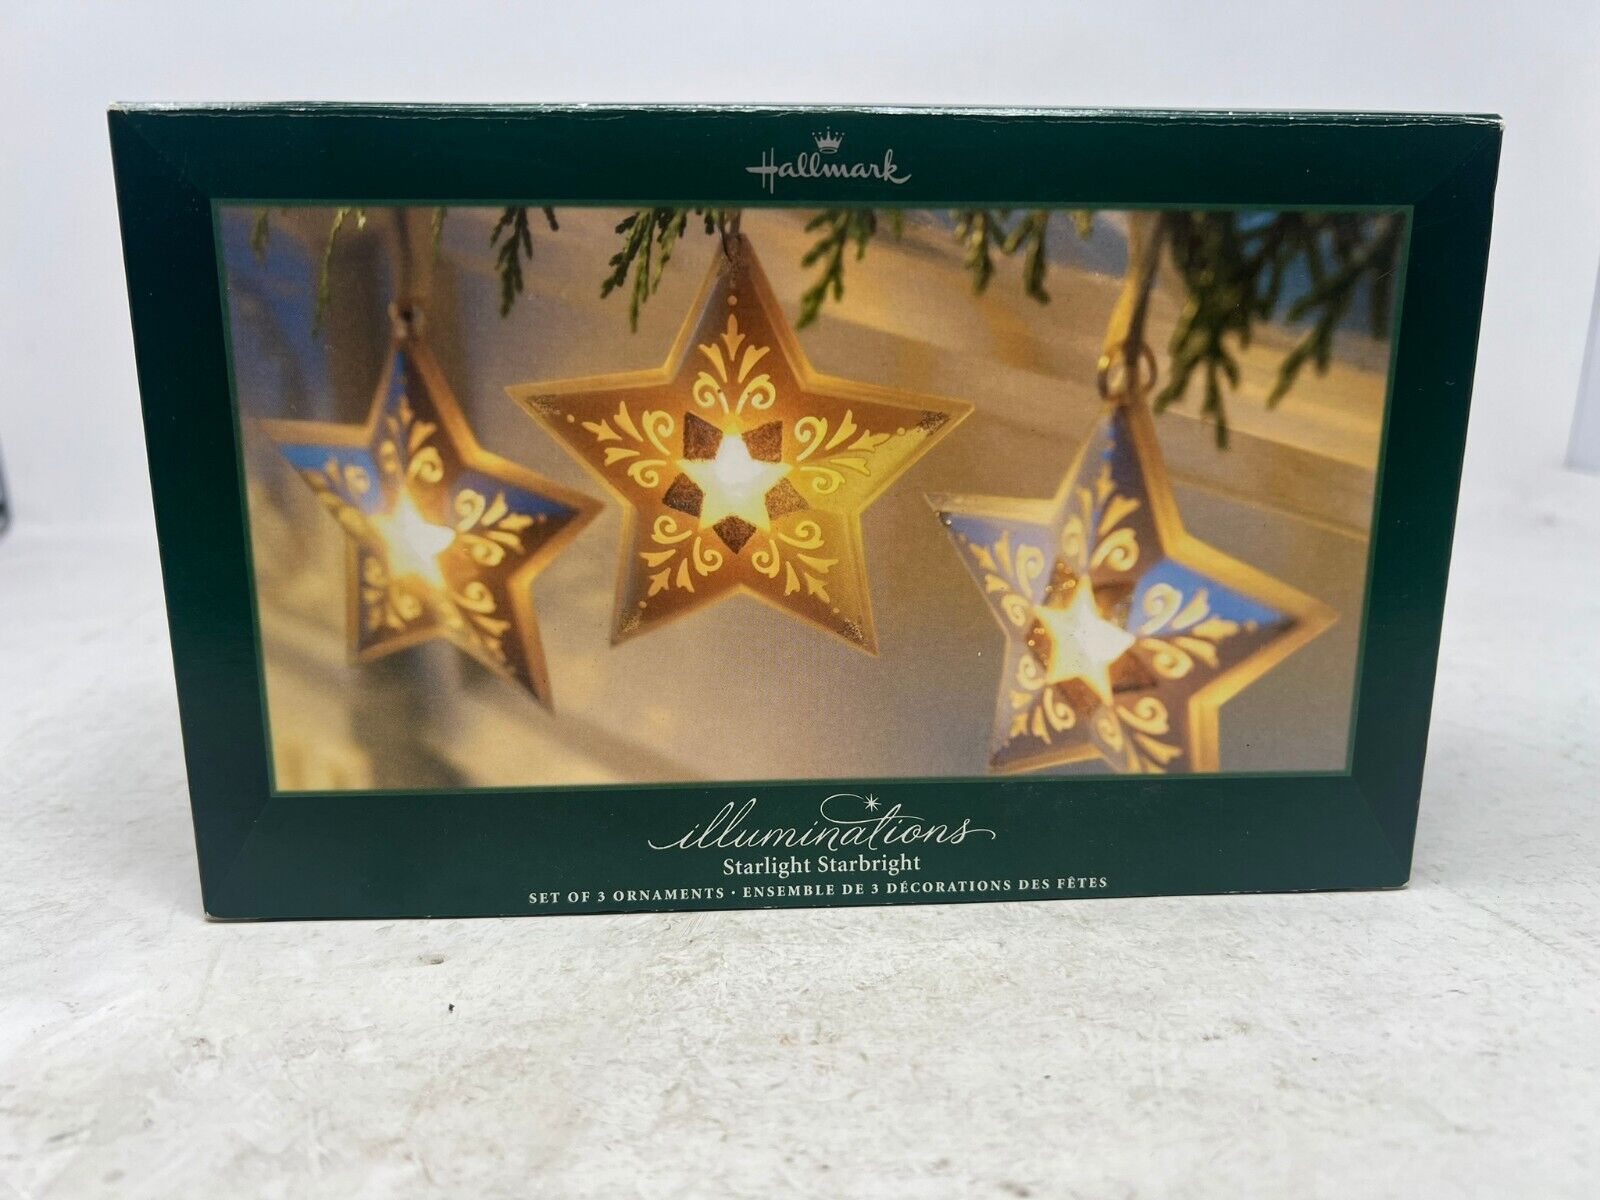  2005 Hallmark Illuminations Starlight Starbright Christmas Ornament Box Set